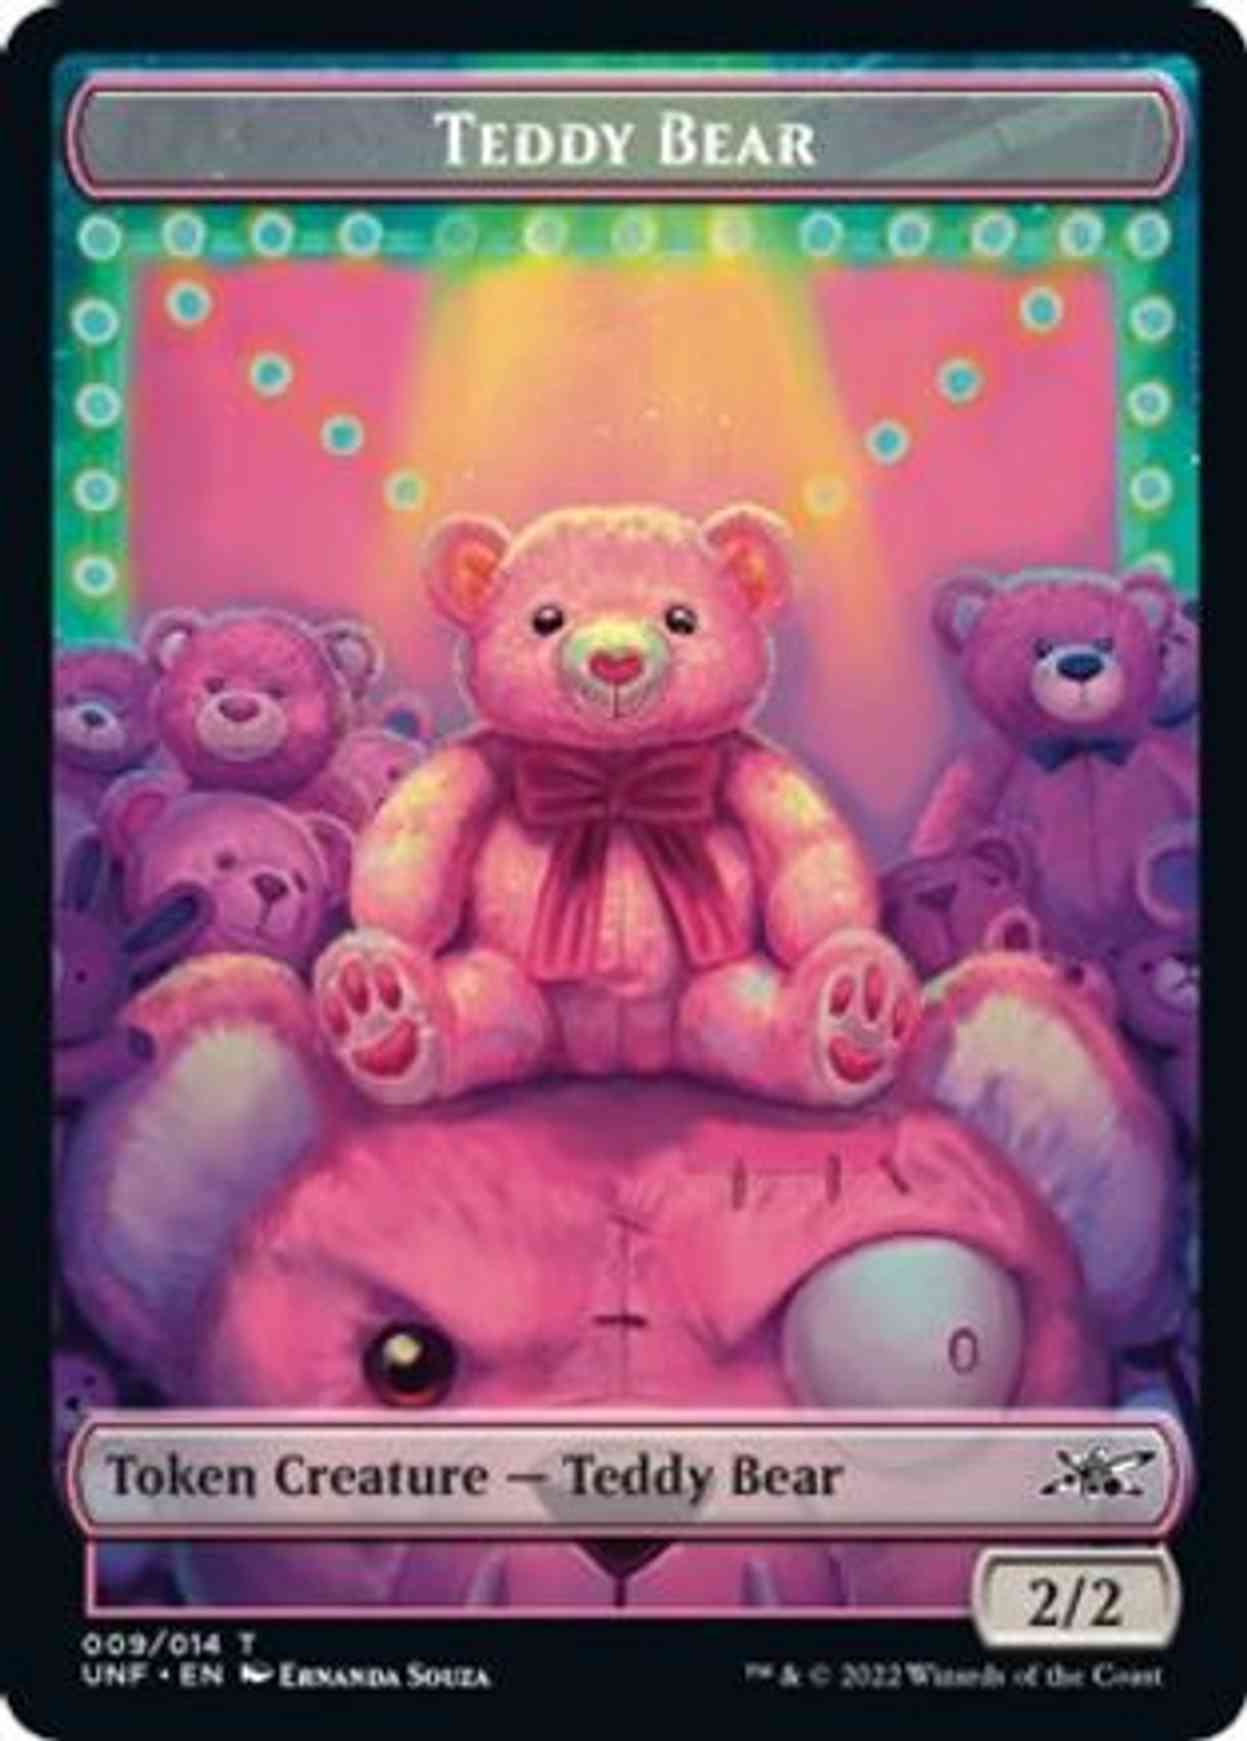 Teddy Bear // Treasure (012) Double-sided Token magic card front